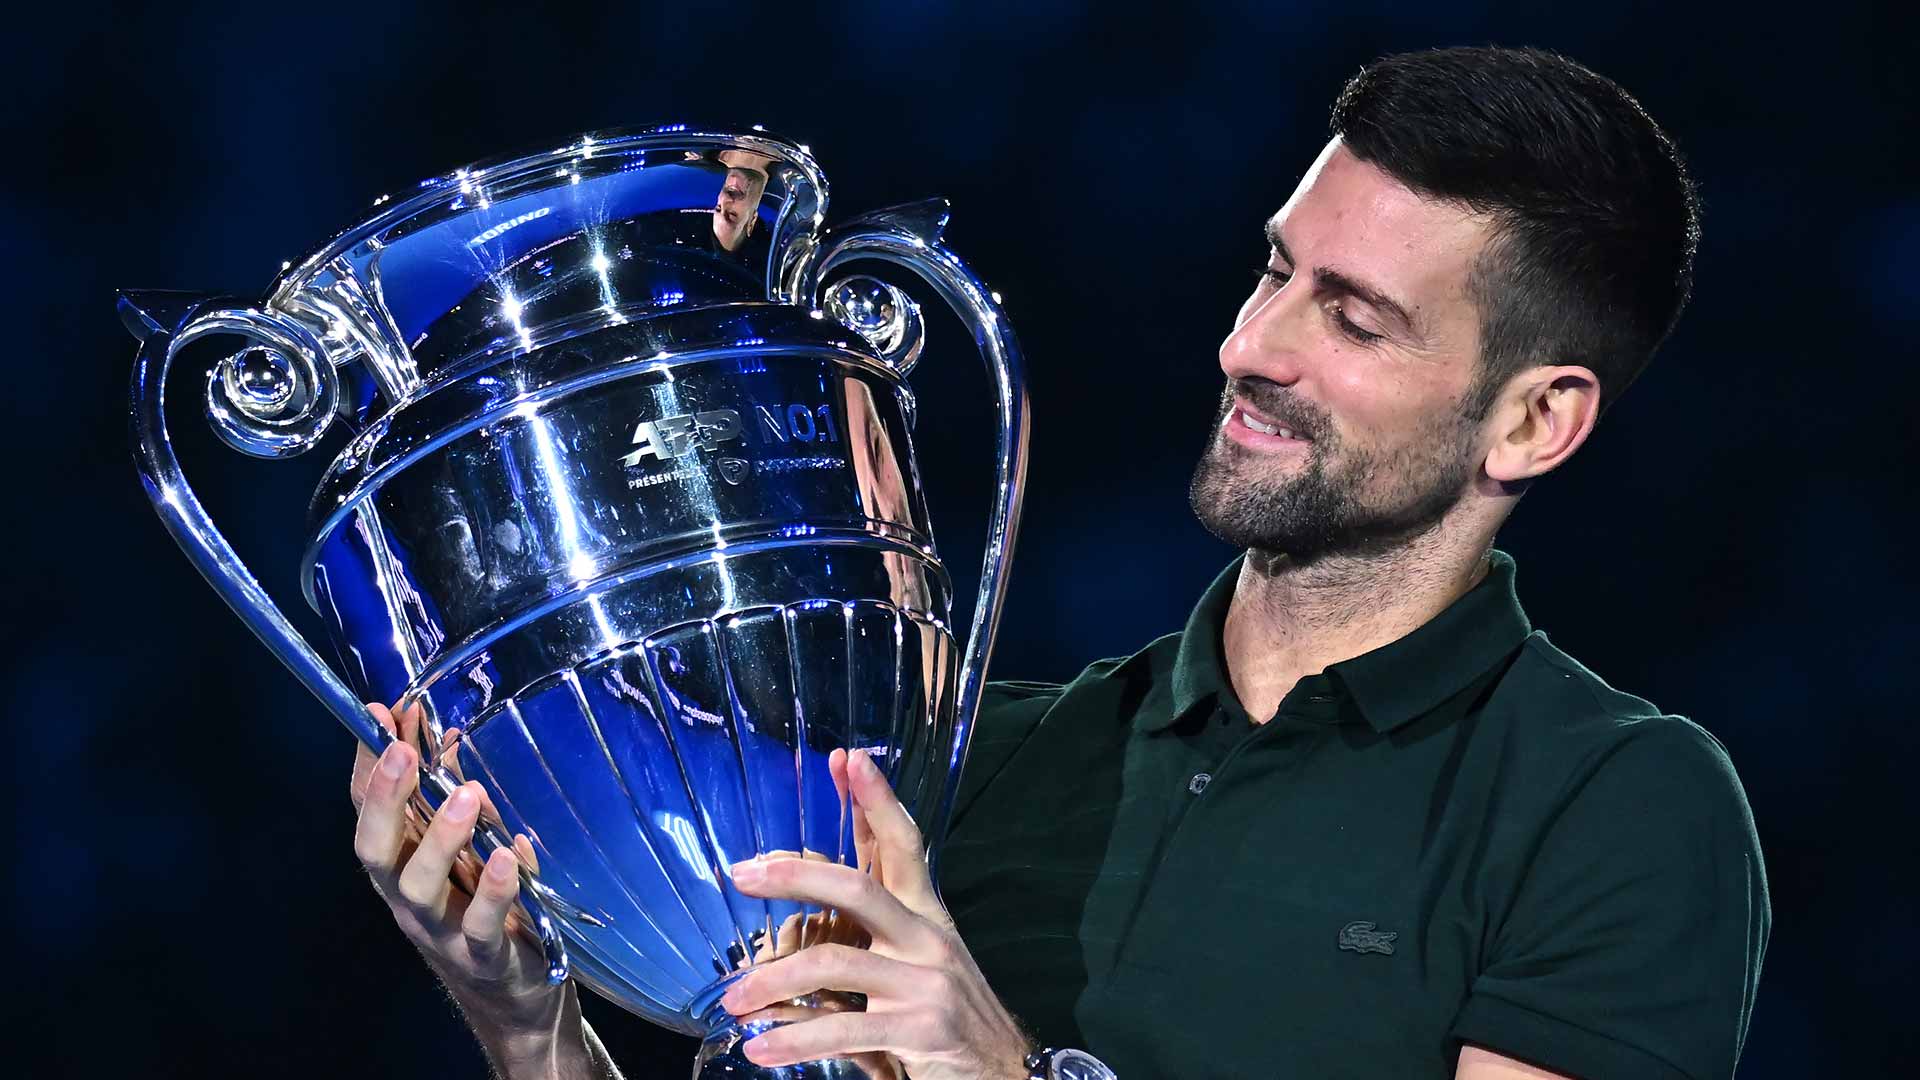 ATP Finals: Novak Djokovic secures year-end No 1 ranking after